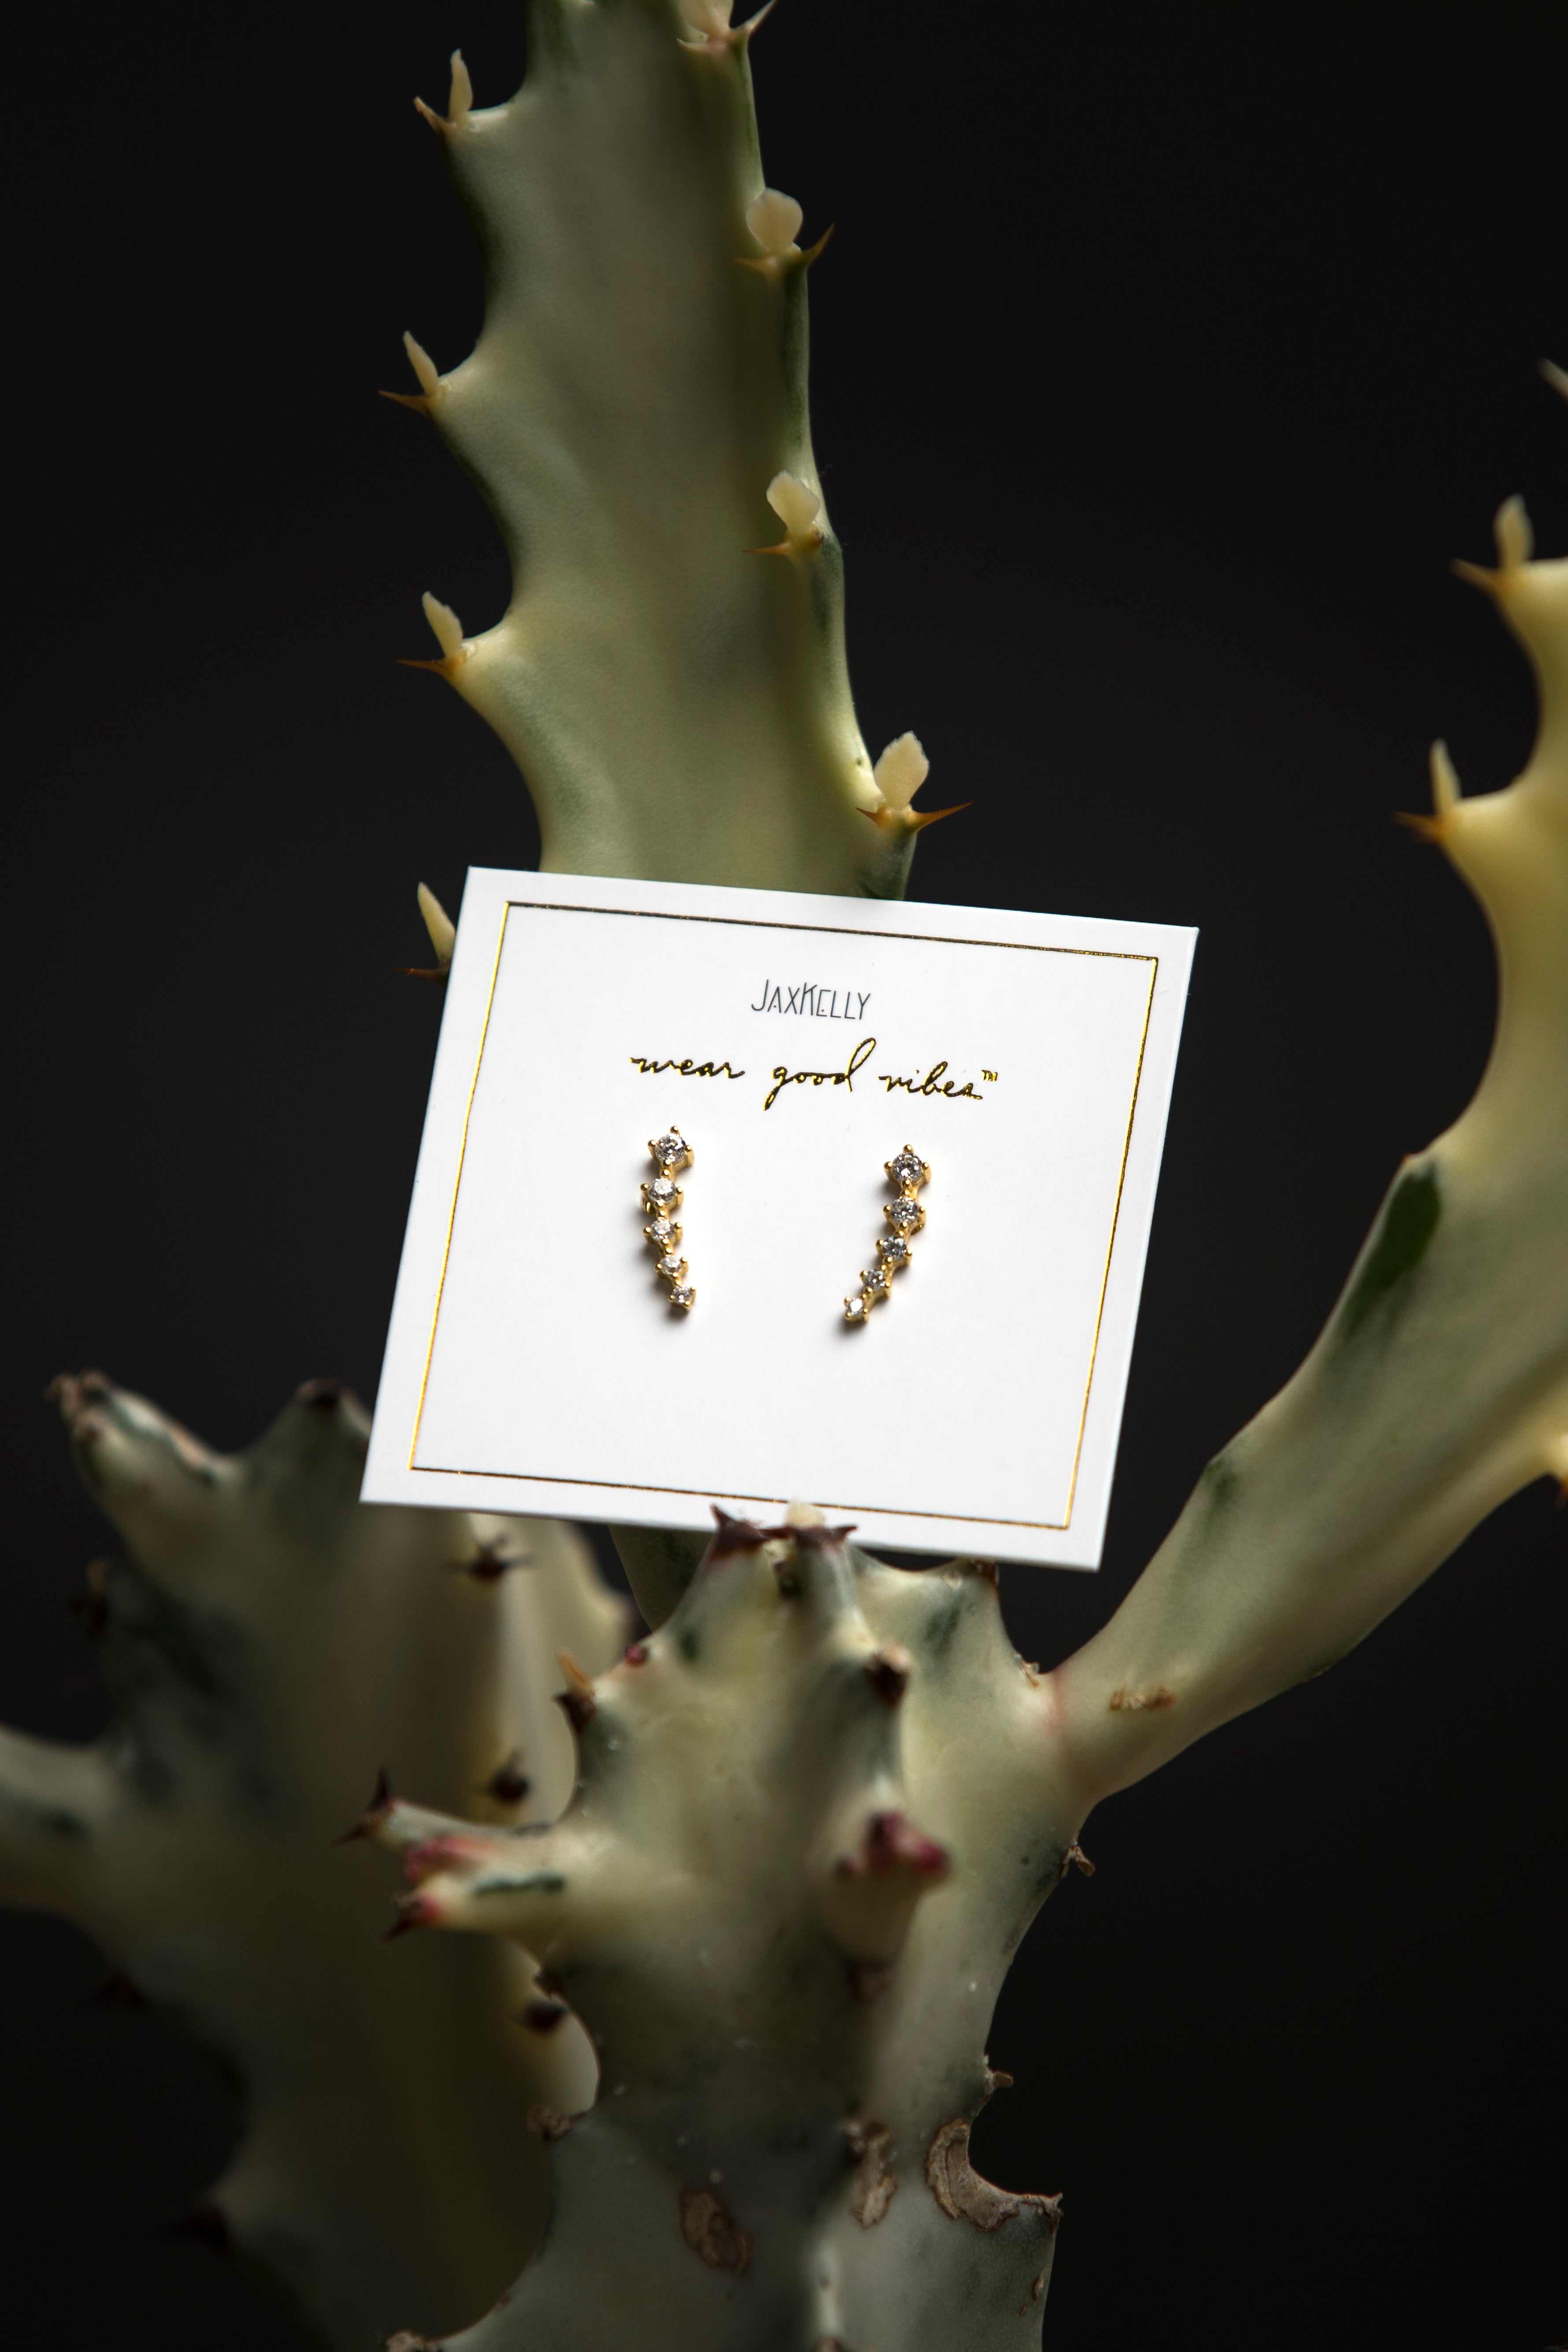 JaxKelly White Crawler Earrings - Jewelry - Women's Clothing Store - Ladies Boutique - Accessories - O KOO RAN - Big Bear Lake California